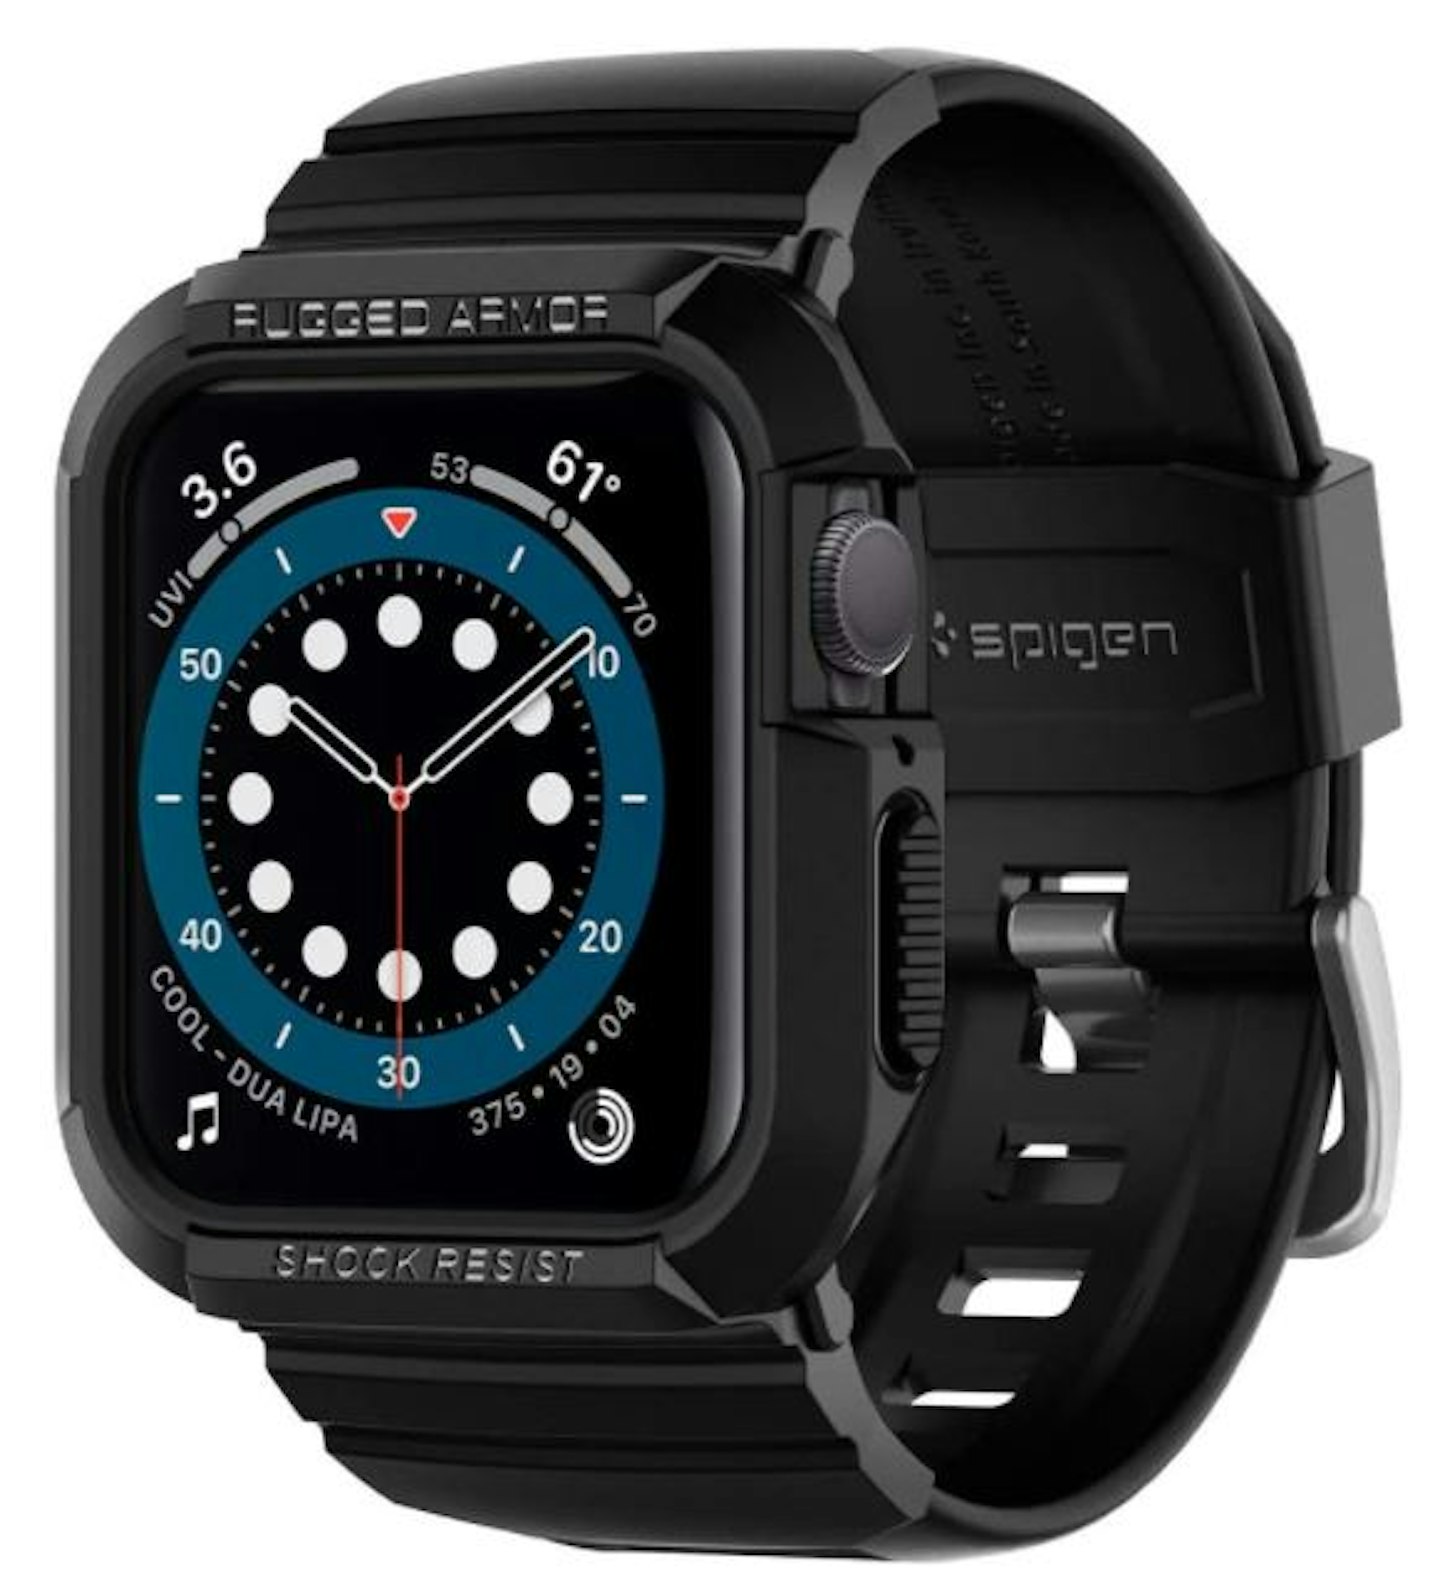 Best Apple Watch Cases